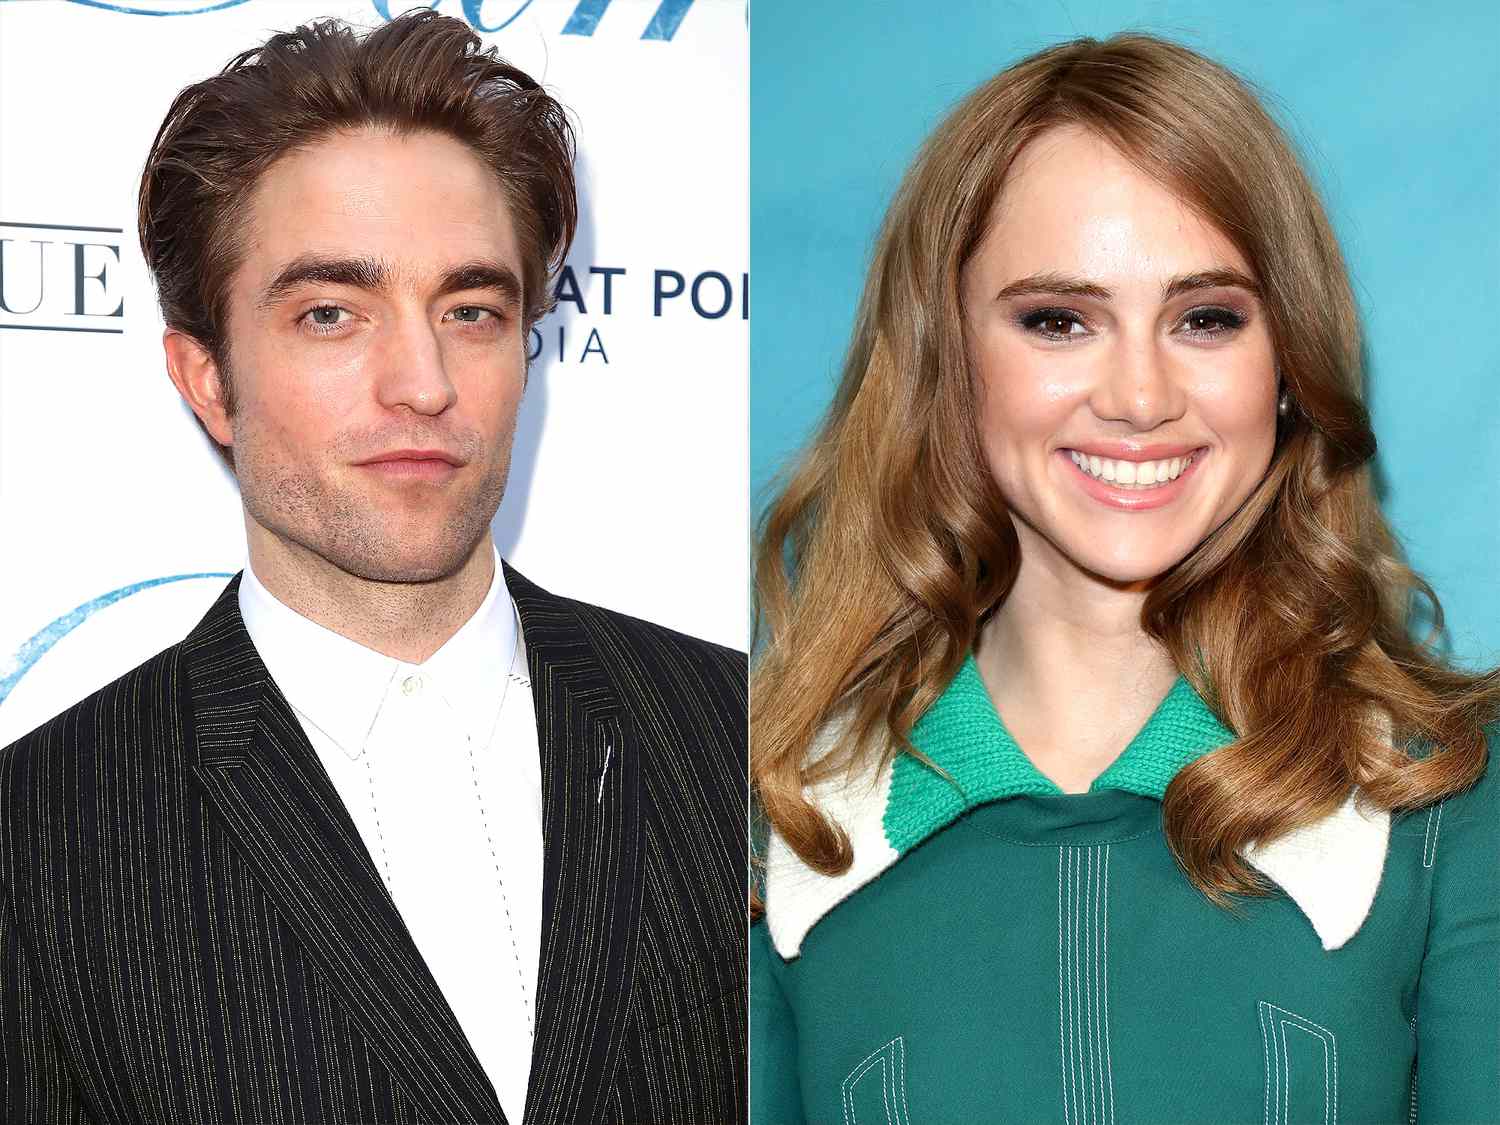 Is robert dating pattinson Robert Pattinson